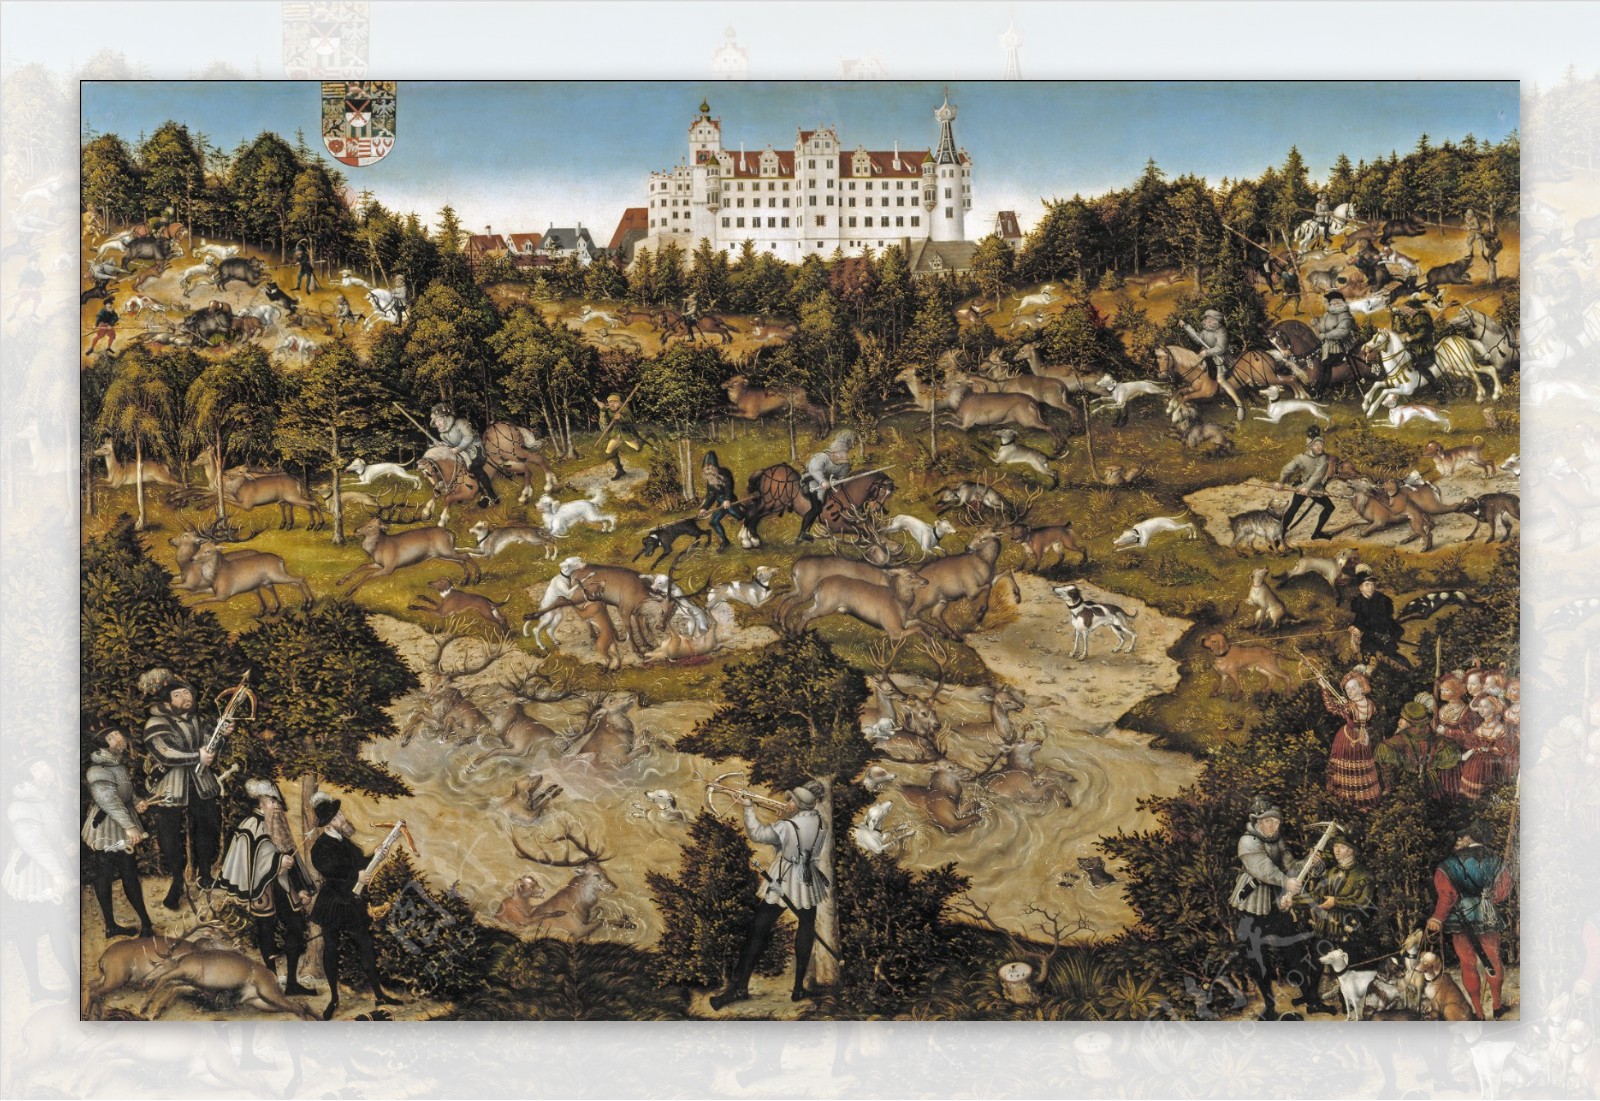 CranachLucasAHuntinHonorofCarlosVatTorgauCastle1544德国画家大卢卡斯克拉纳赫lucascranachtheeld